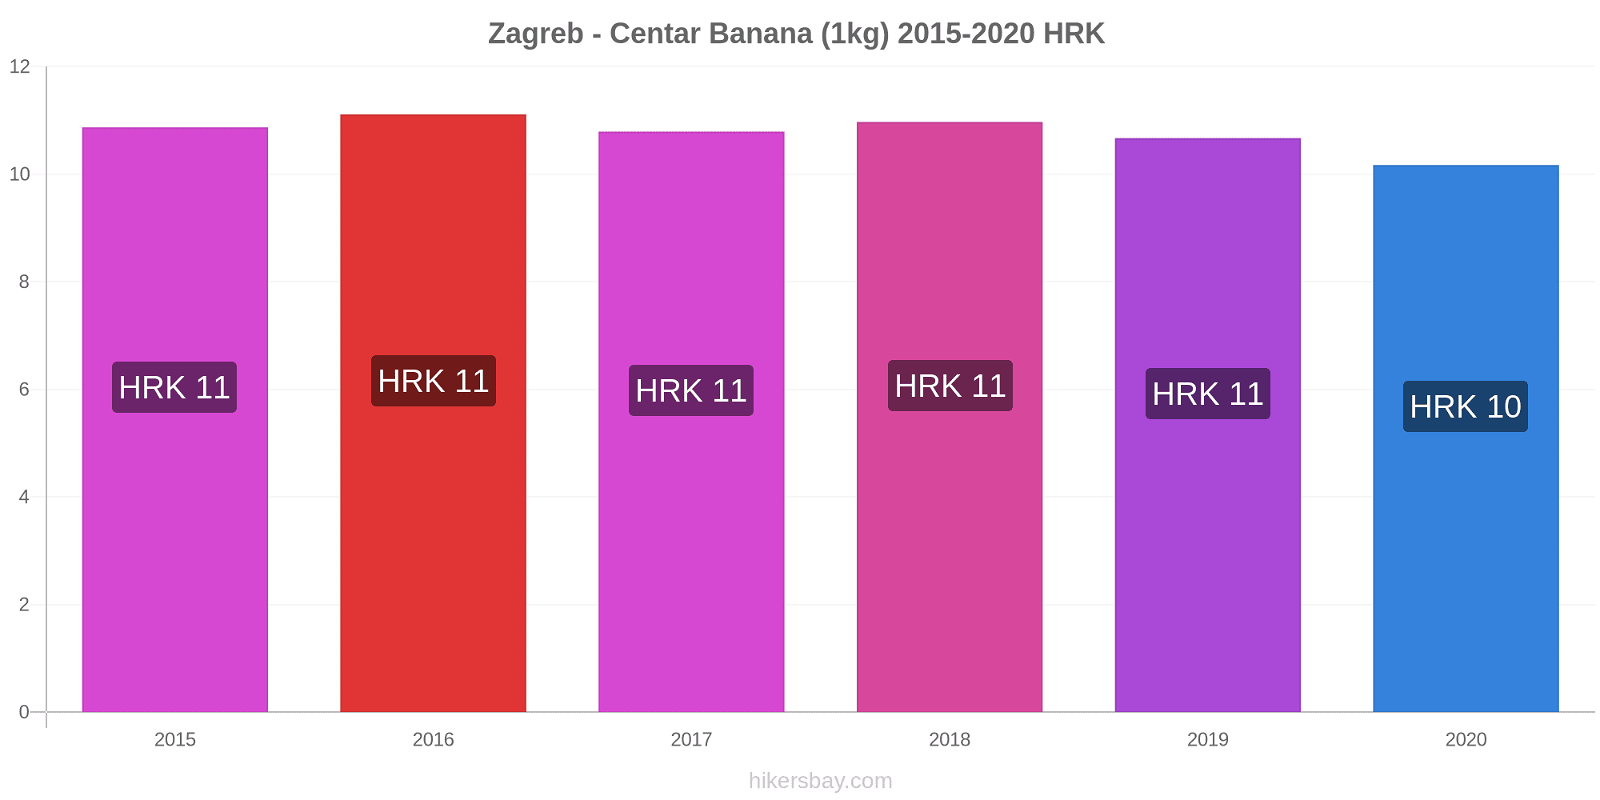 Zagreb - Centar modificări de preț Banana (1kg) hikersbay.com